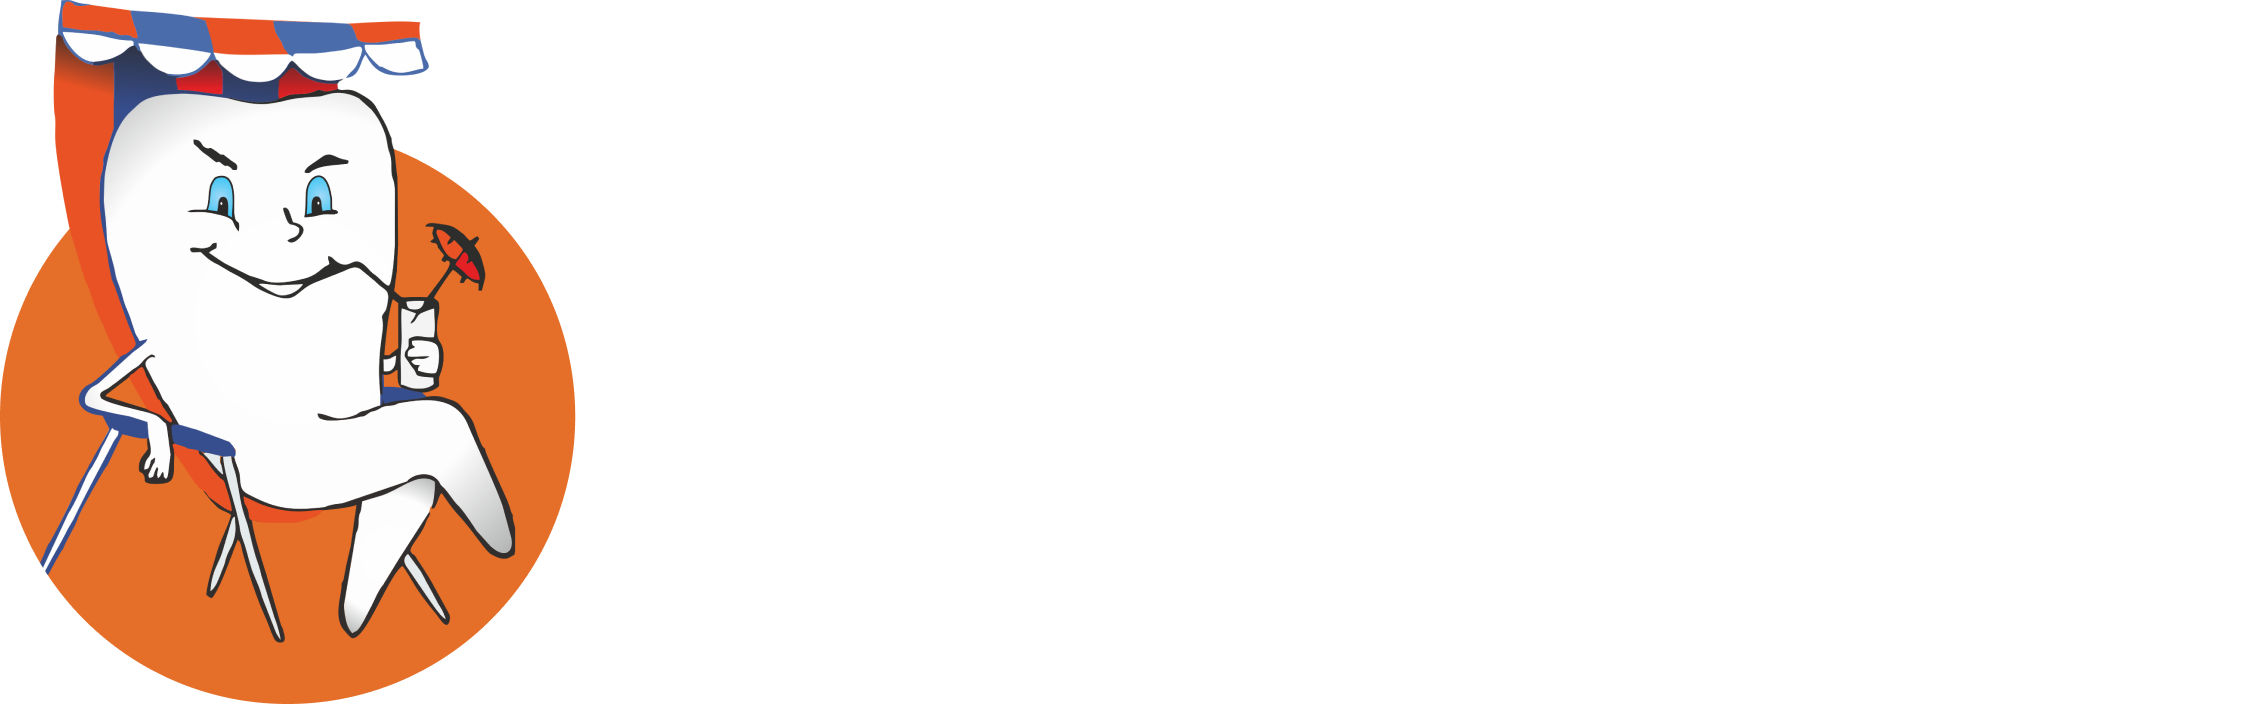 http://comfortdental.ru/wp-content/uploads/2021/07/logo-mob-1.png